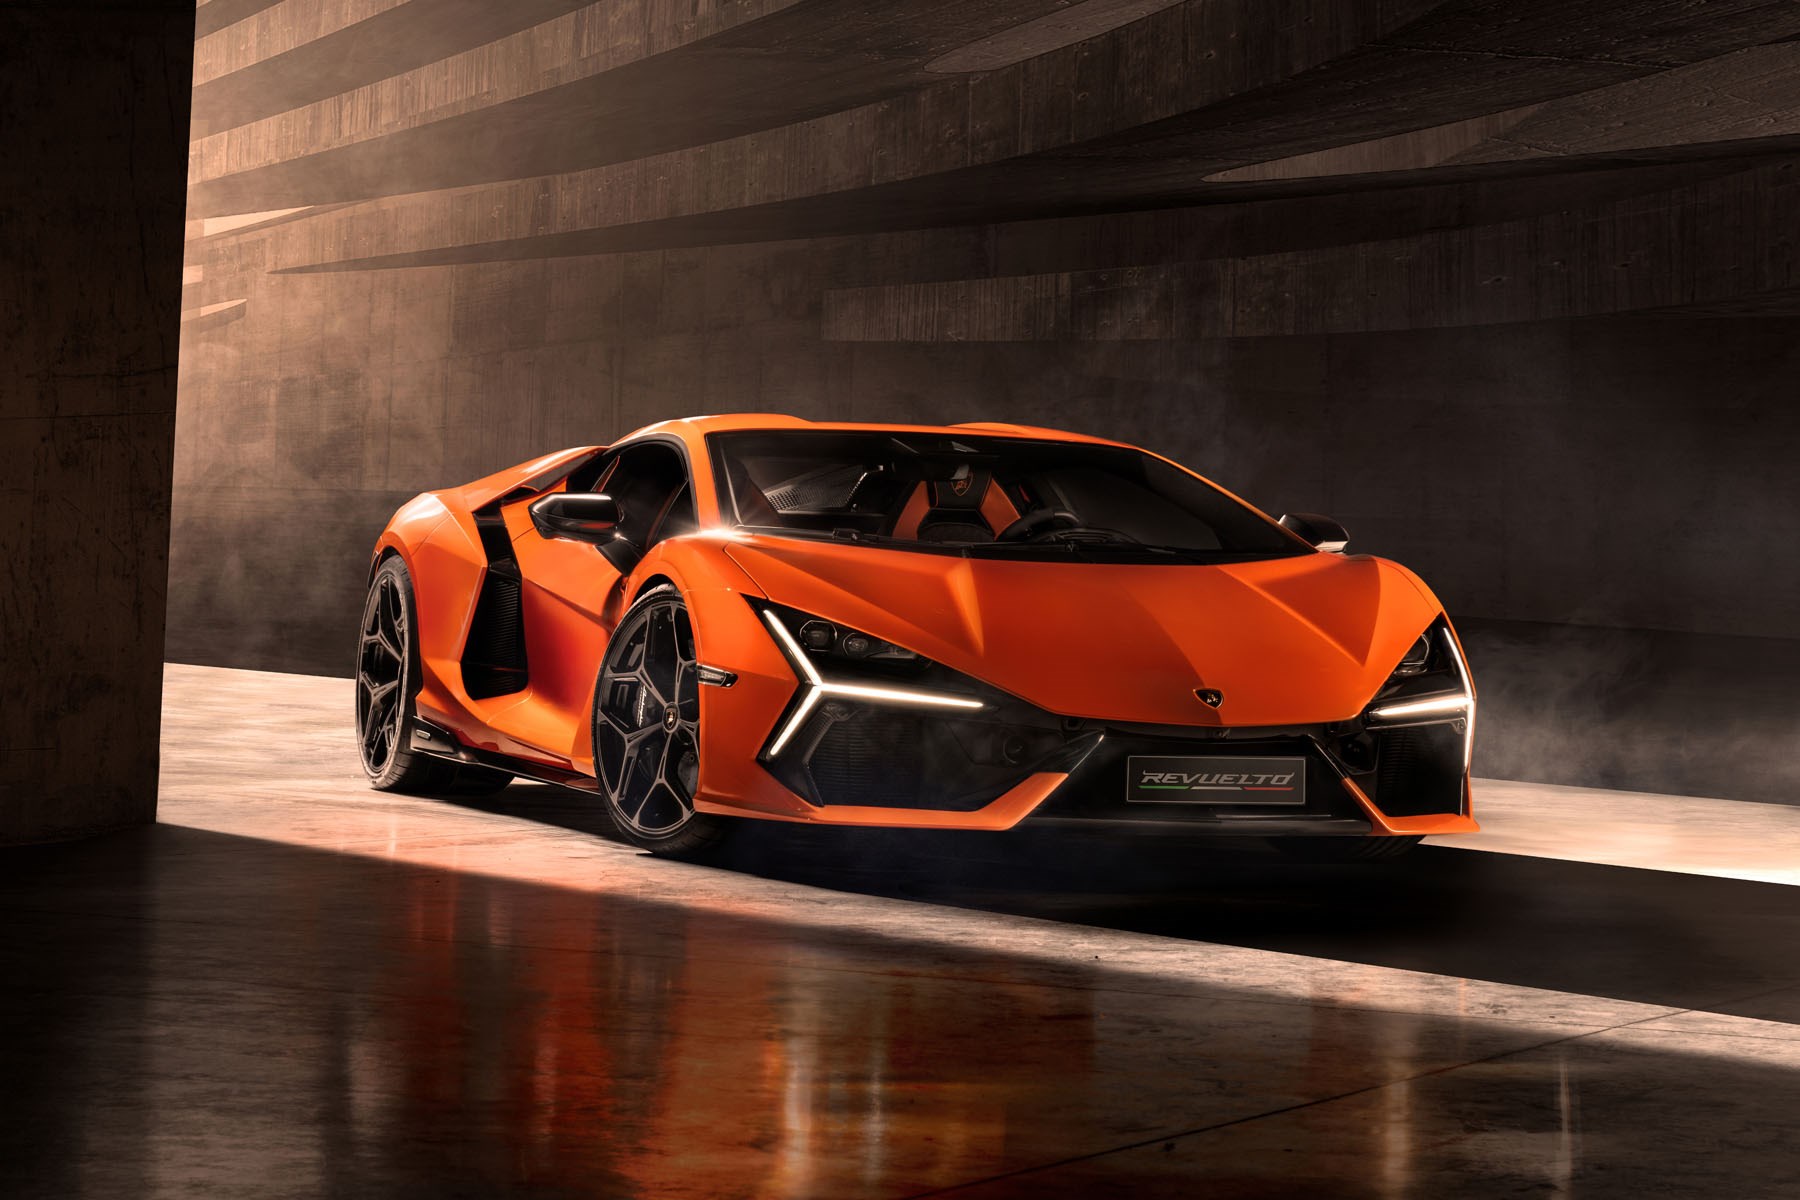 Lamborghini reveals the last V12-powered cars it will build before